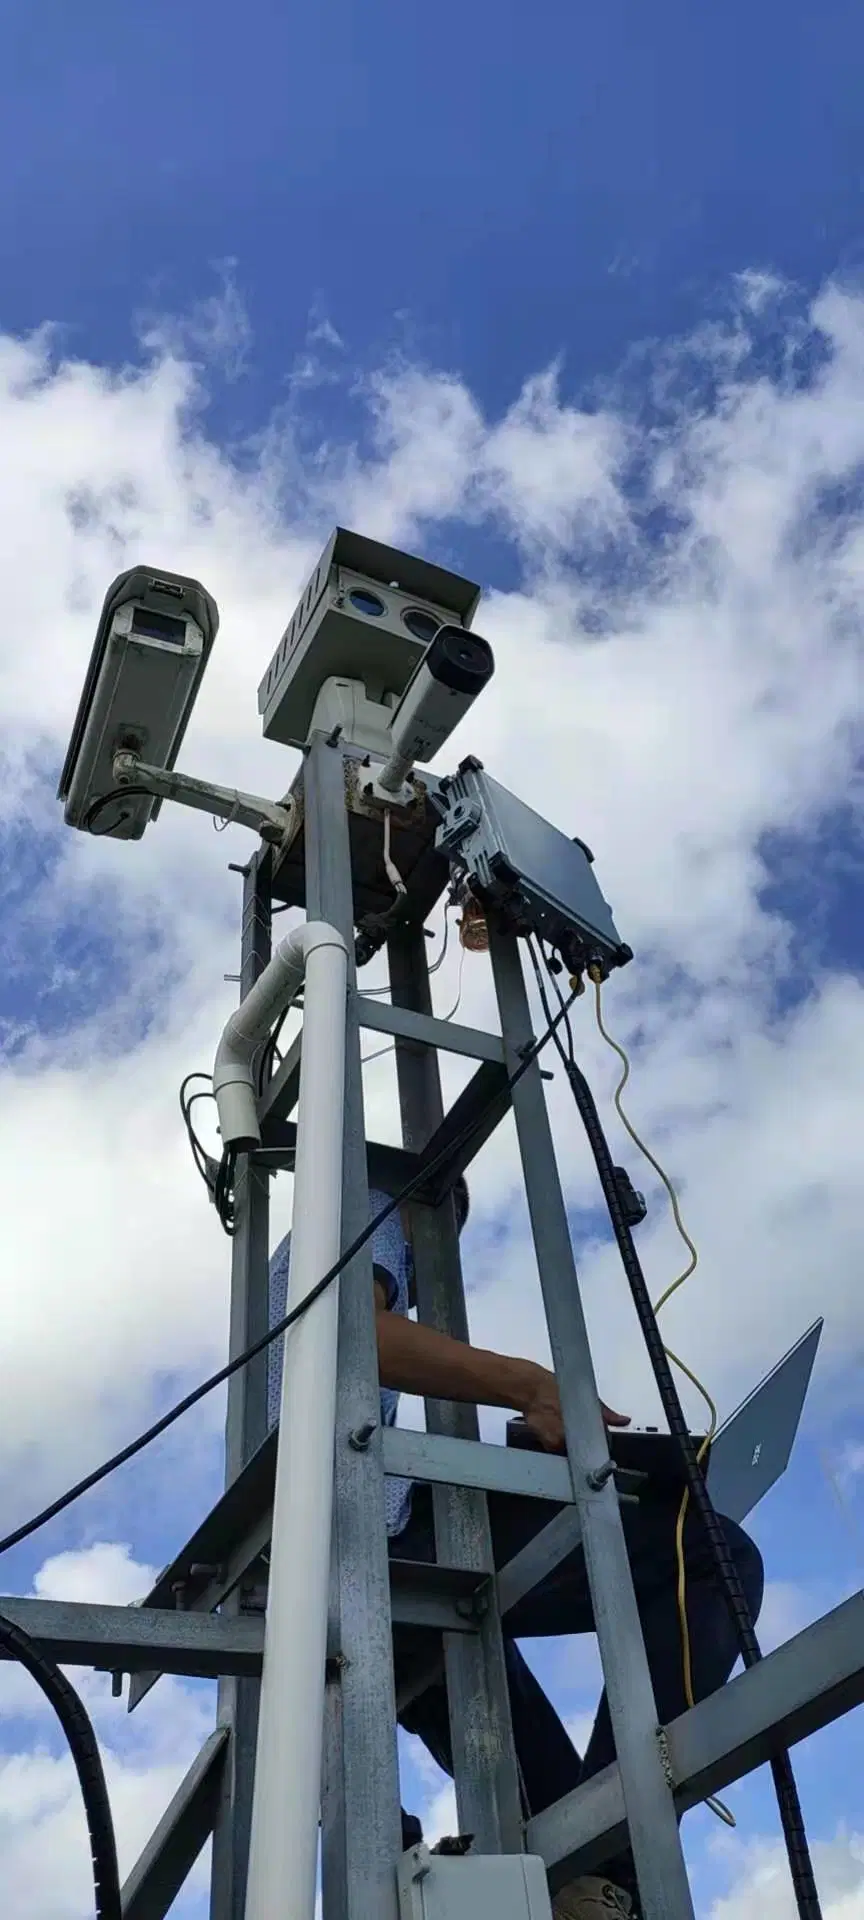 Coastal Surveillance / Coastline Security Radar with C Band for Offshore Platform Security